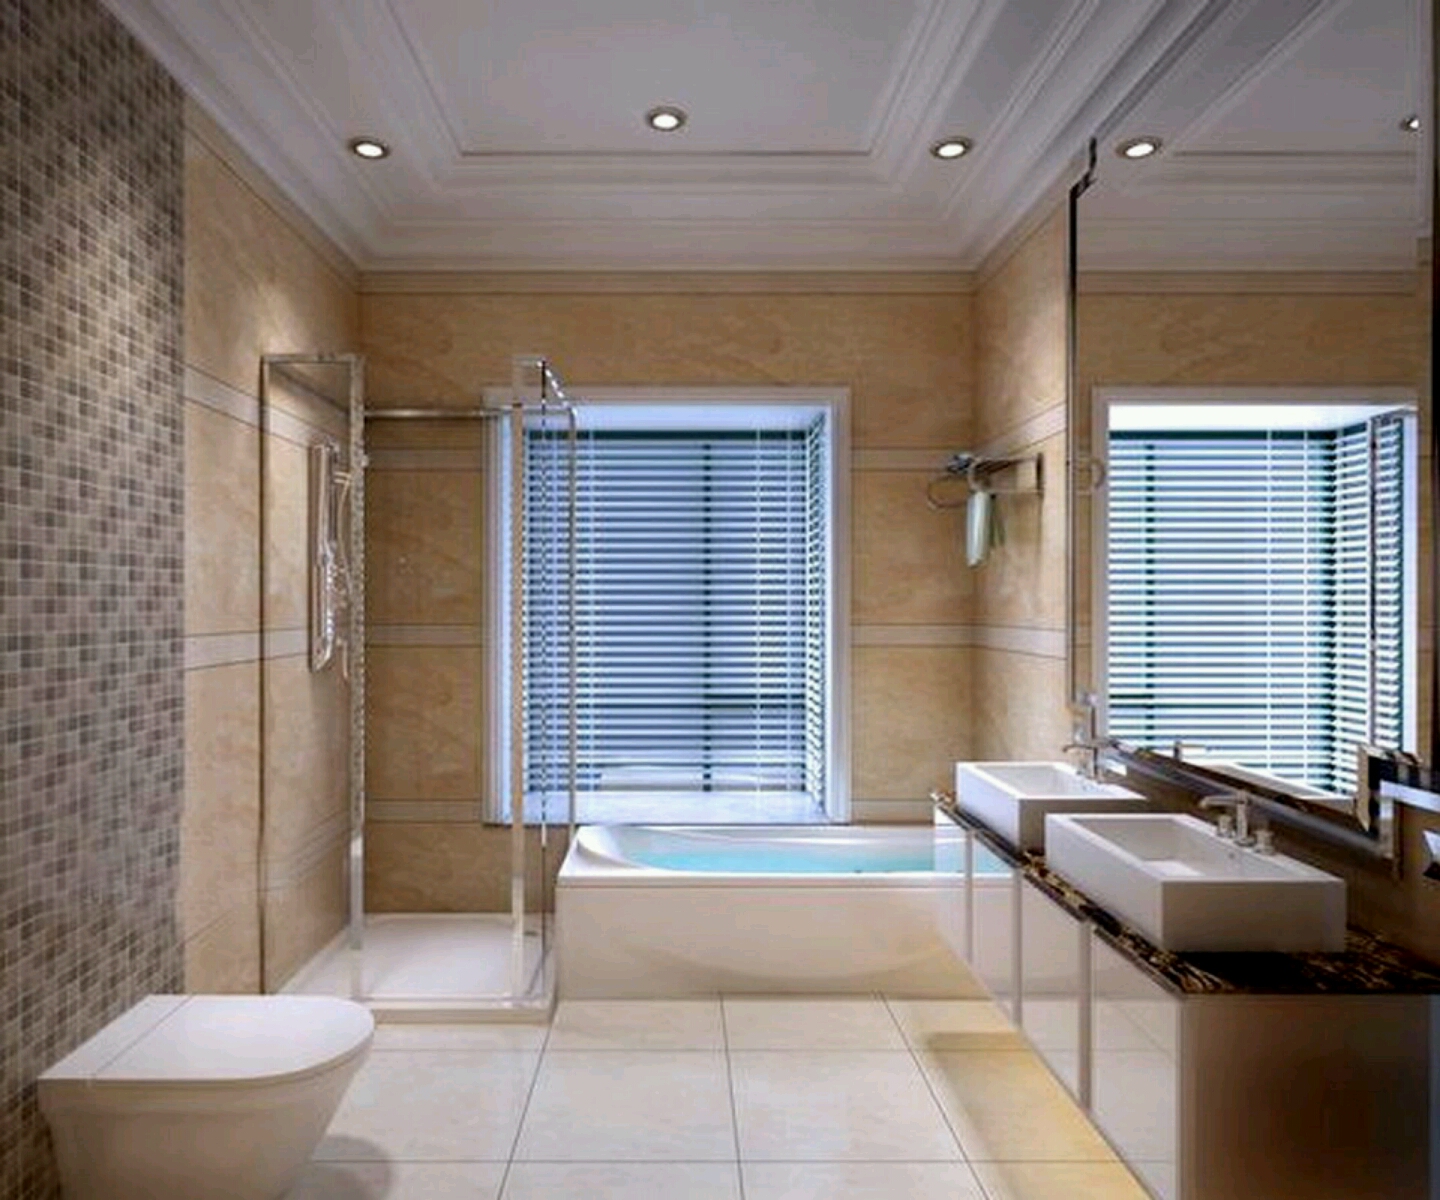 New home designs latest.: Modern bathrooms best designs ideas.